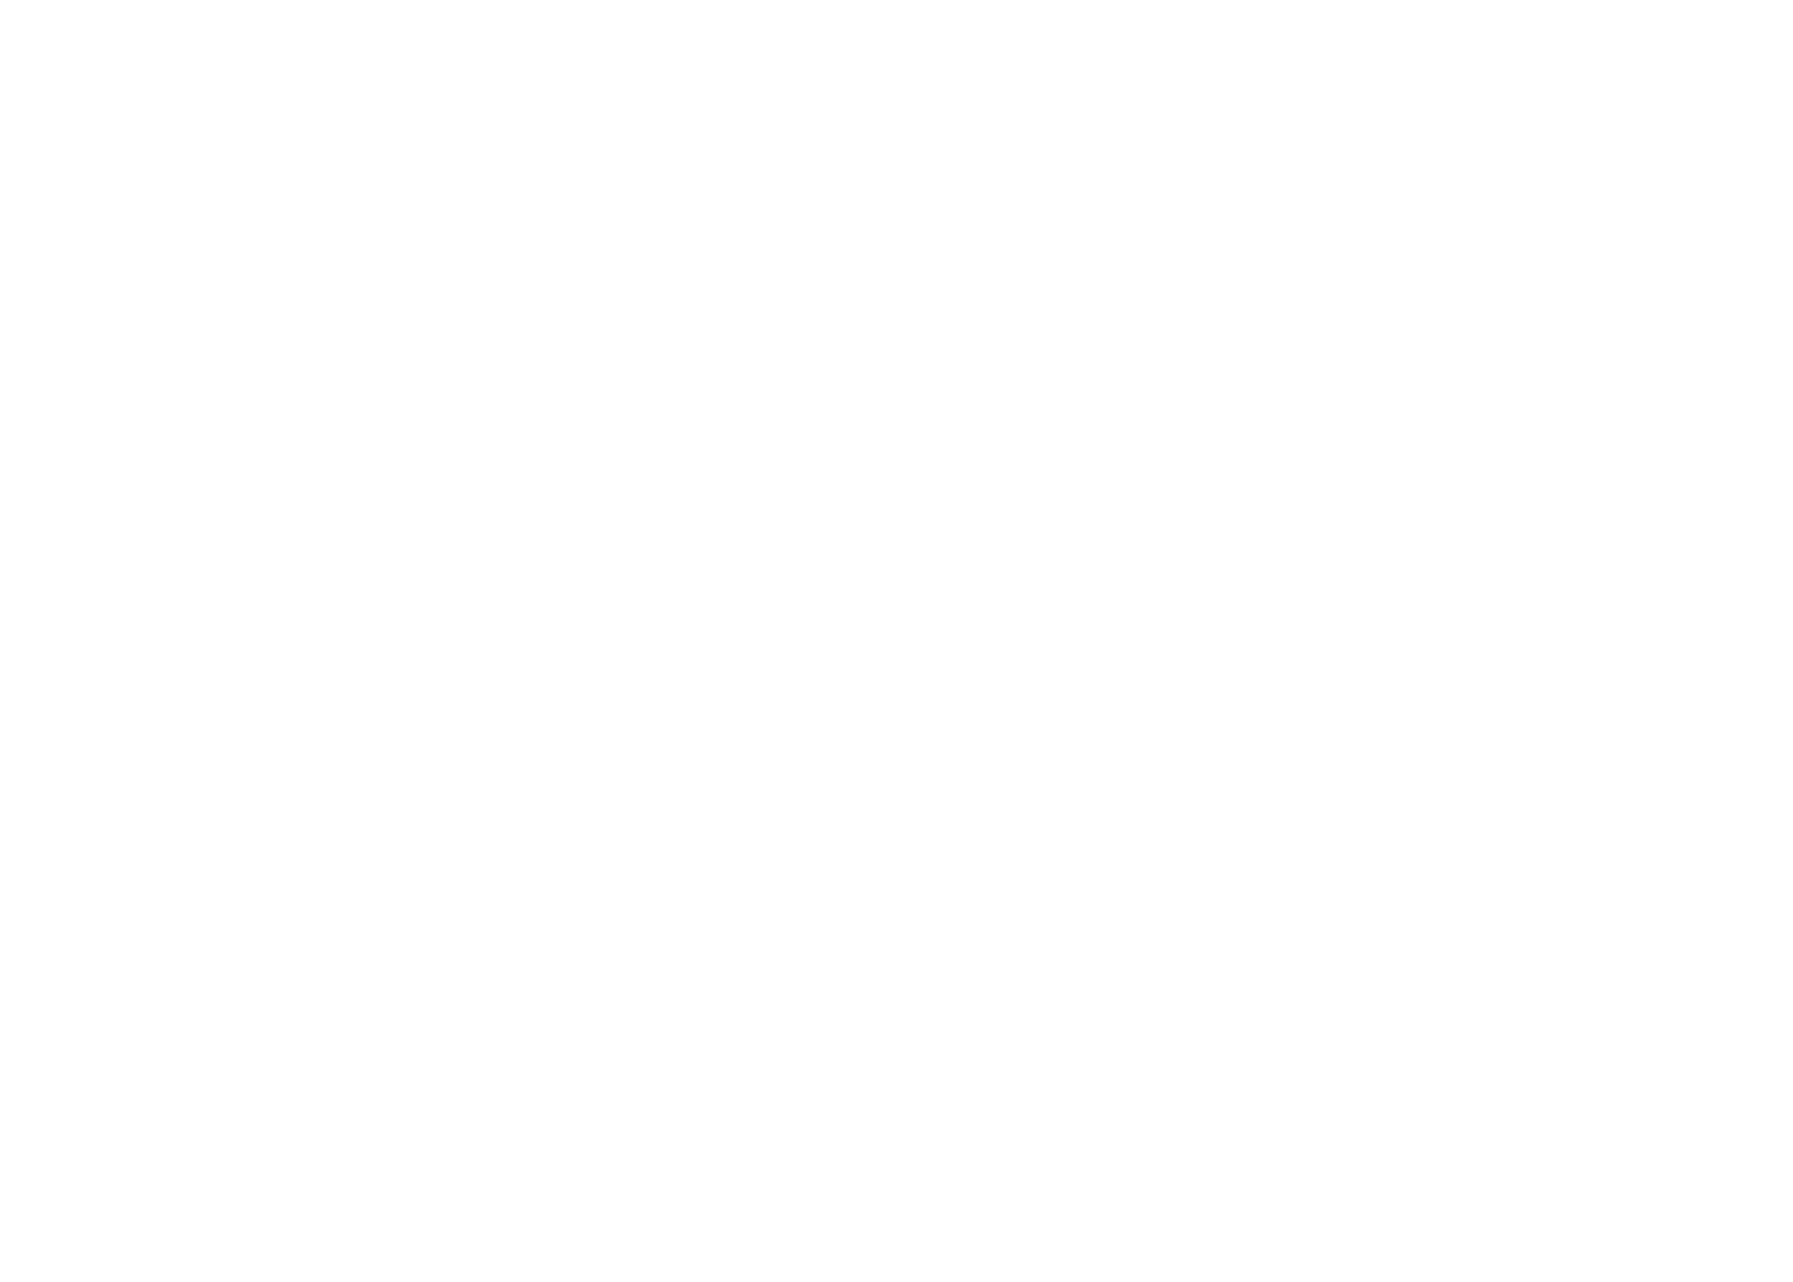 grainfol bioestimulantes cultivos extensivos